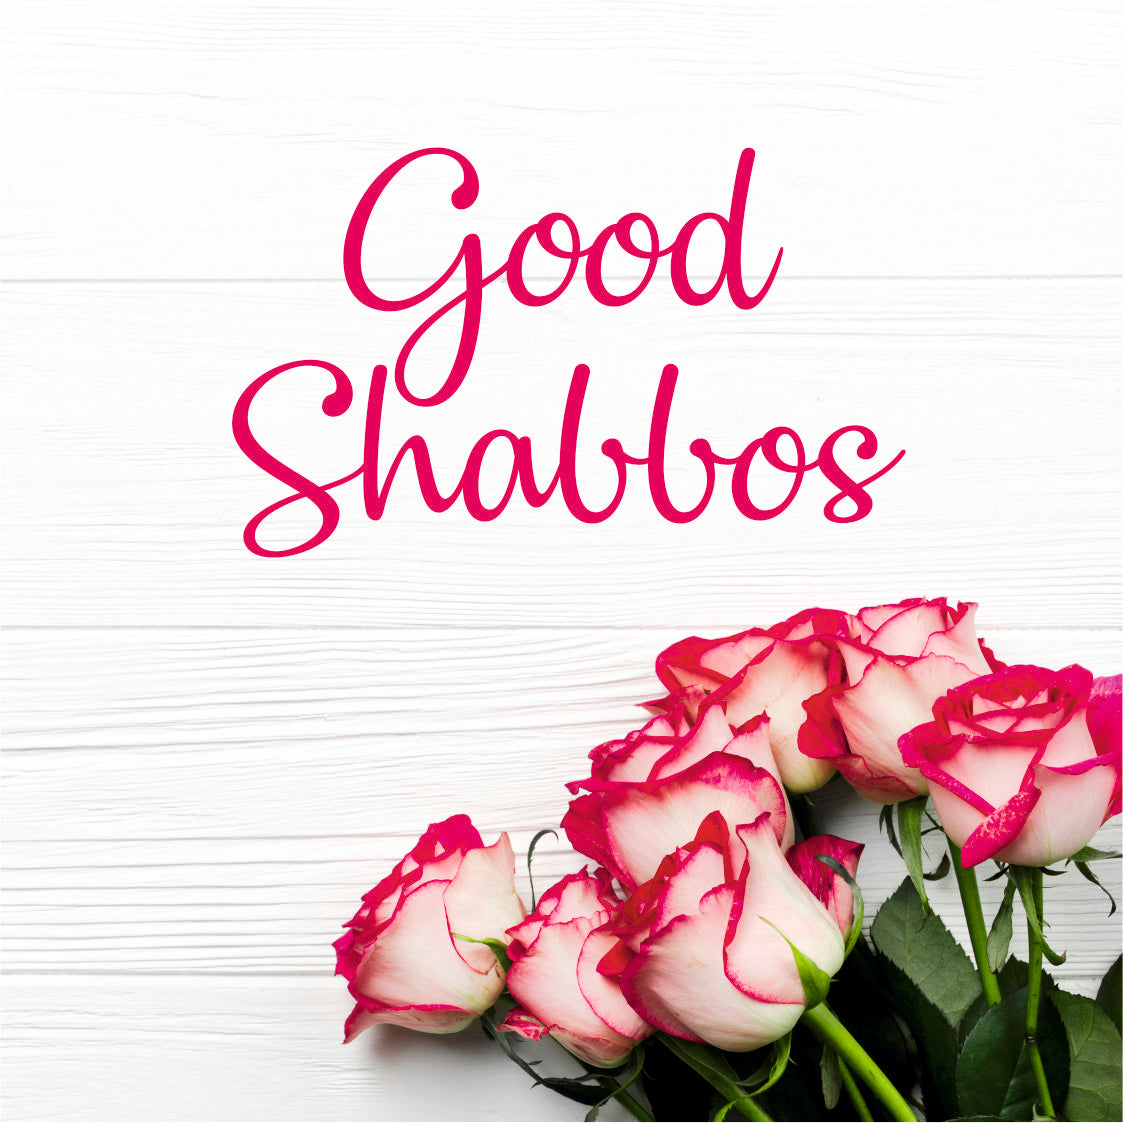 Good Shabbos Card